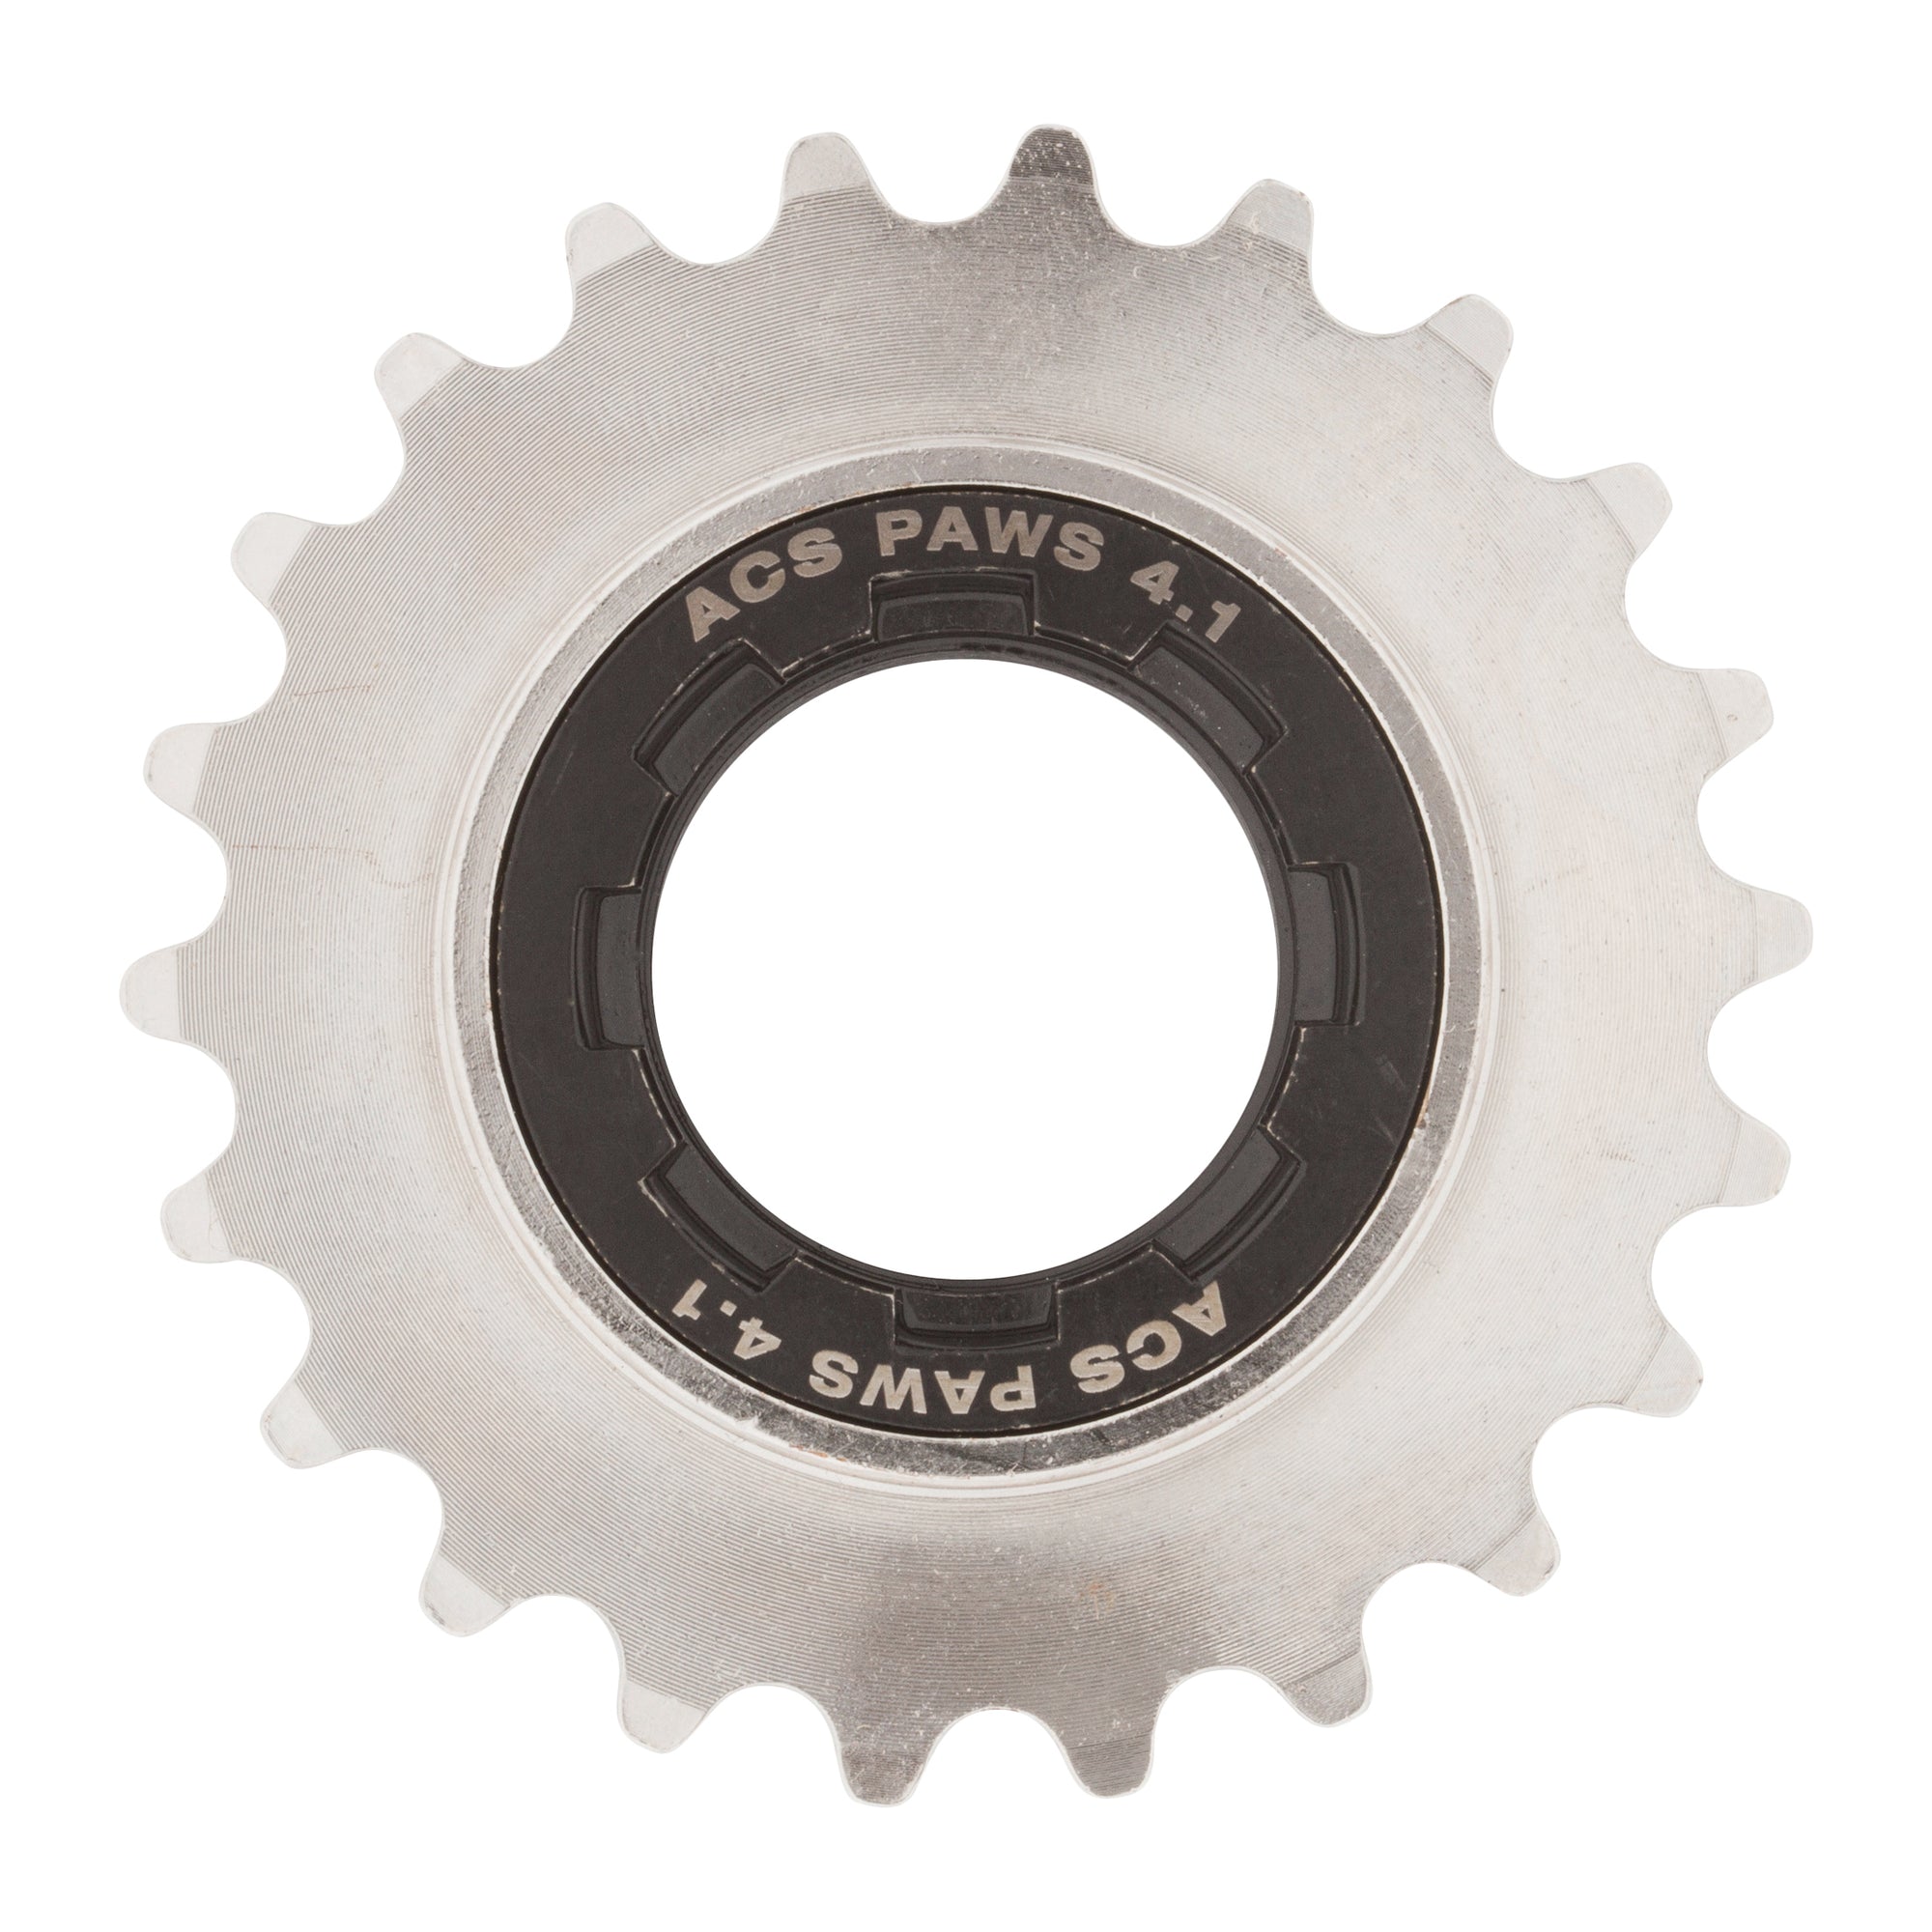 ACS Paws 4.1 22t BMX Freewheel - 1/8" & 3/32" - Black/Nickel